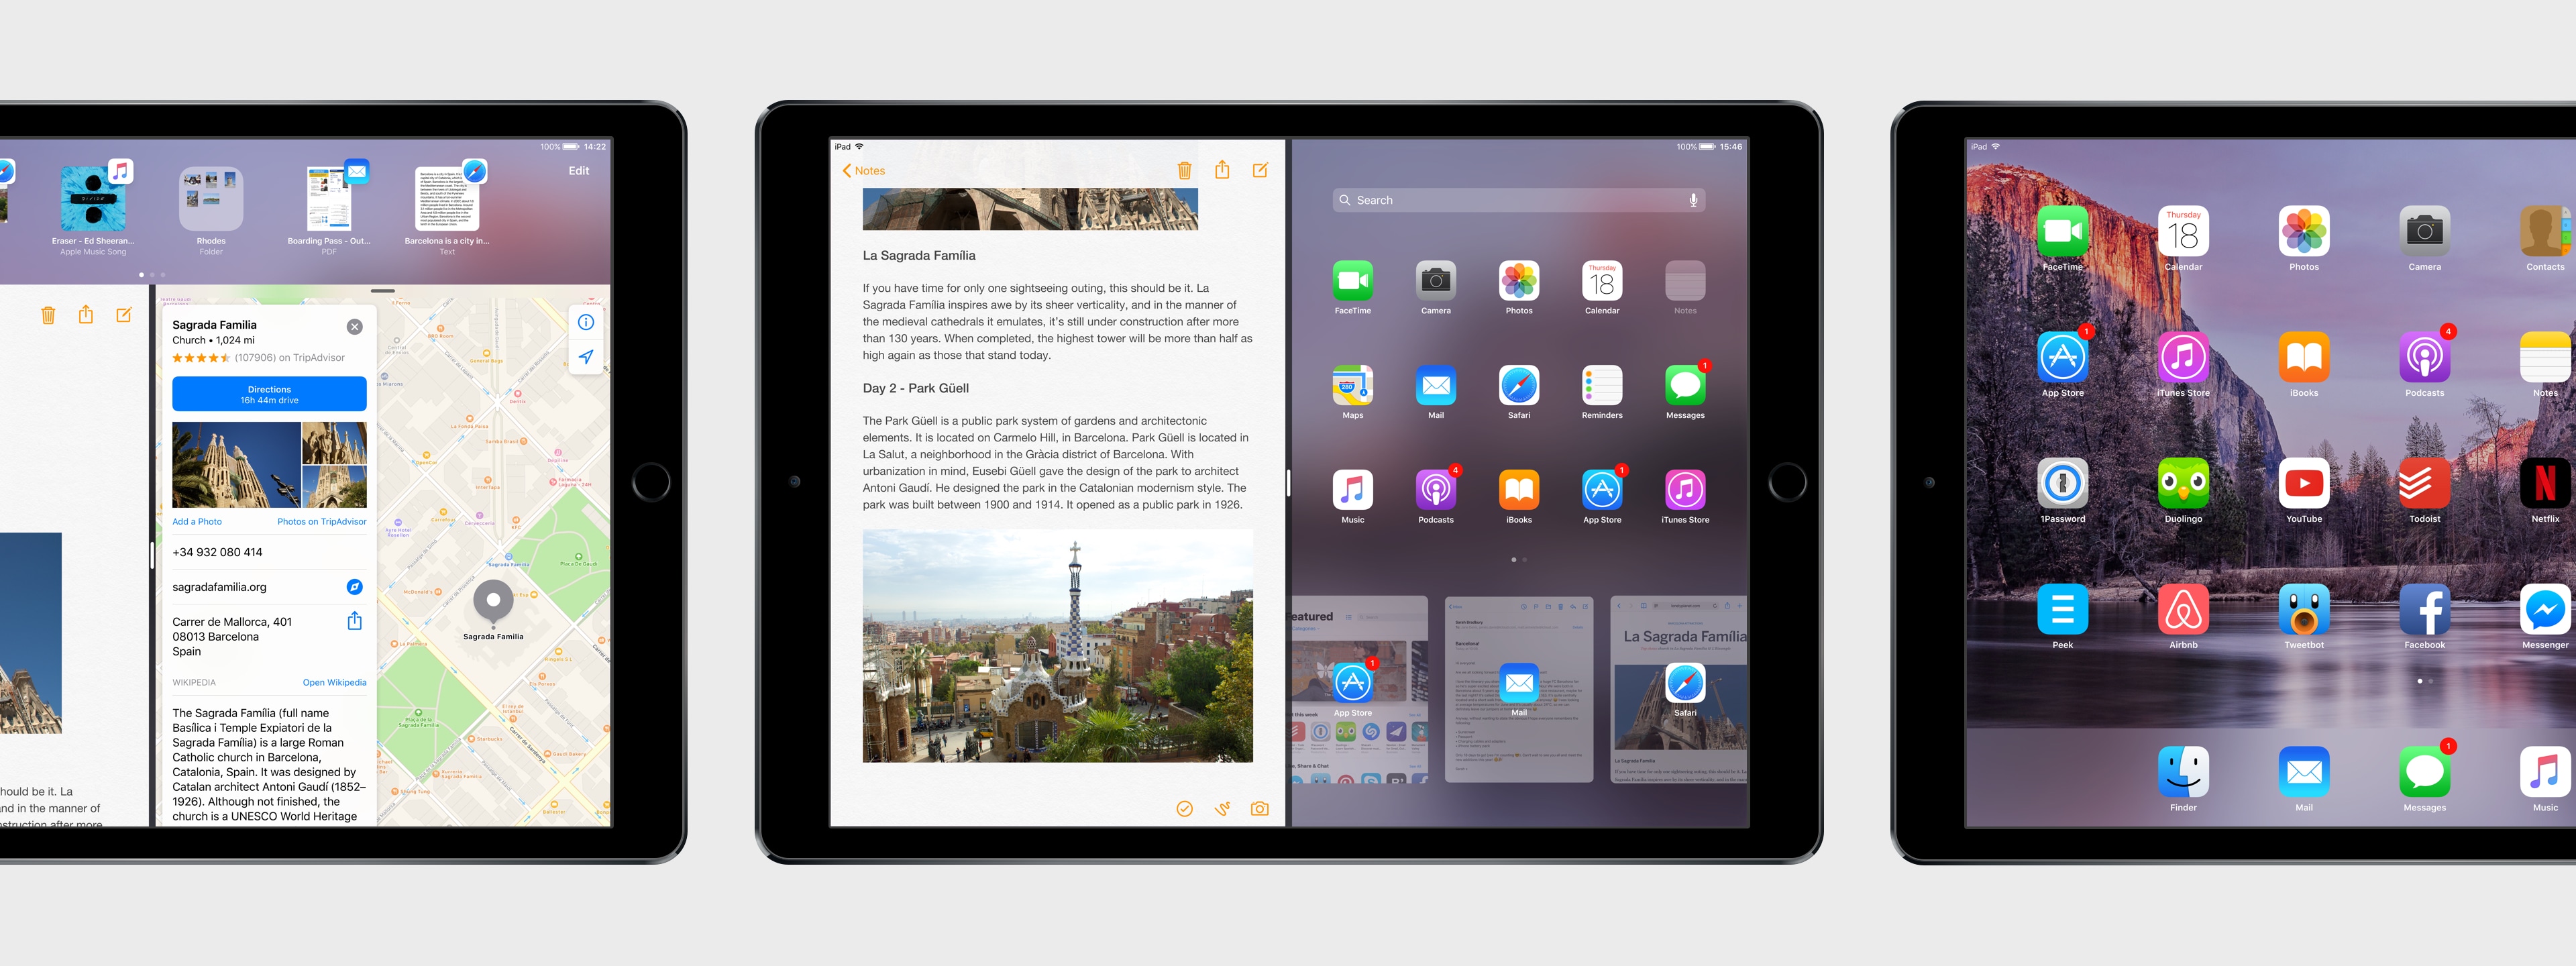 Conceito de iOS 11 para iPad